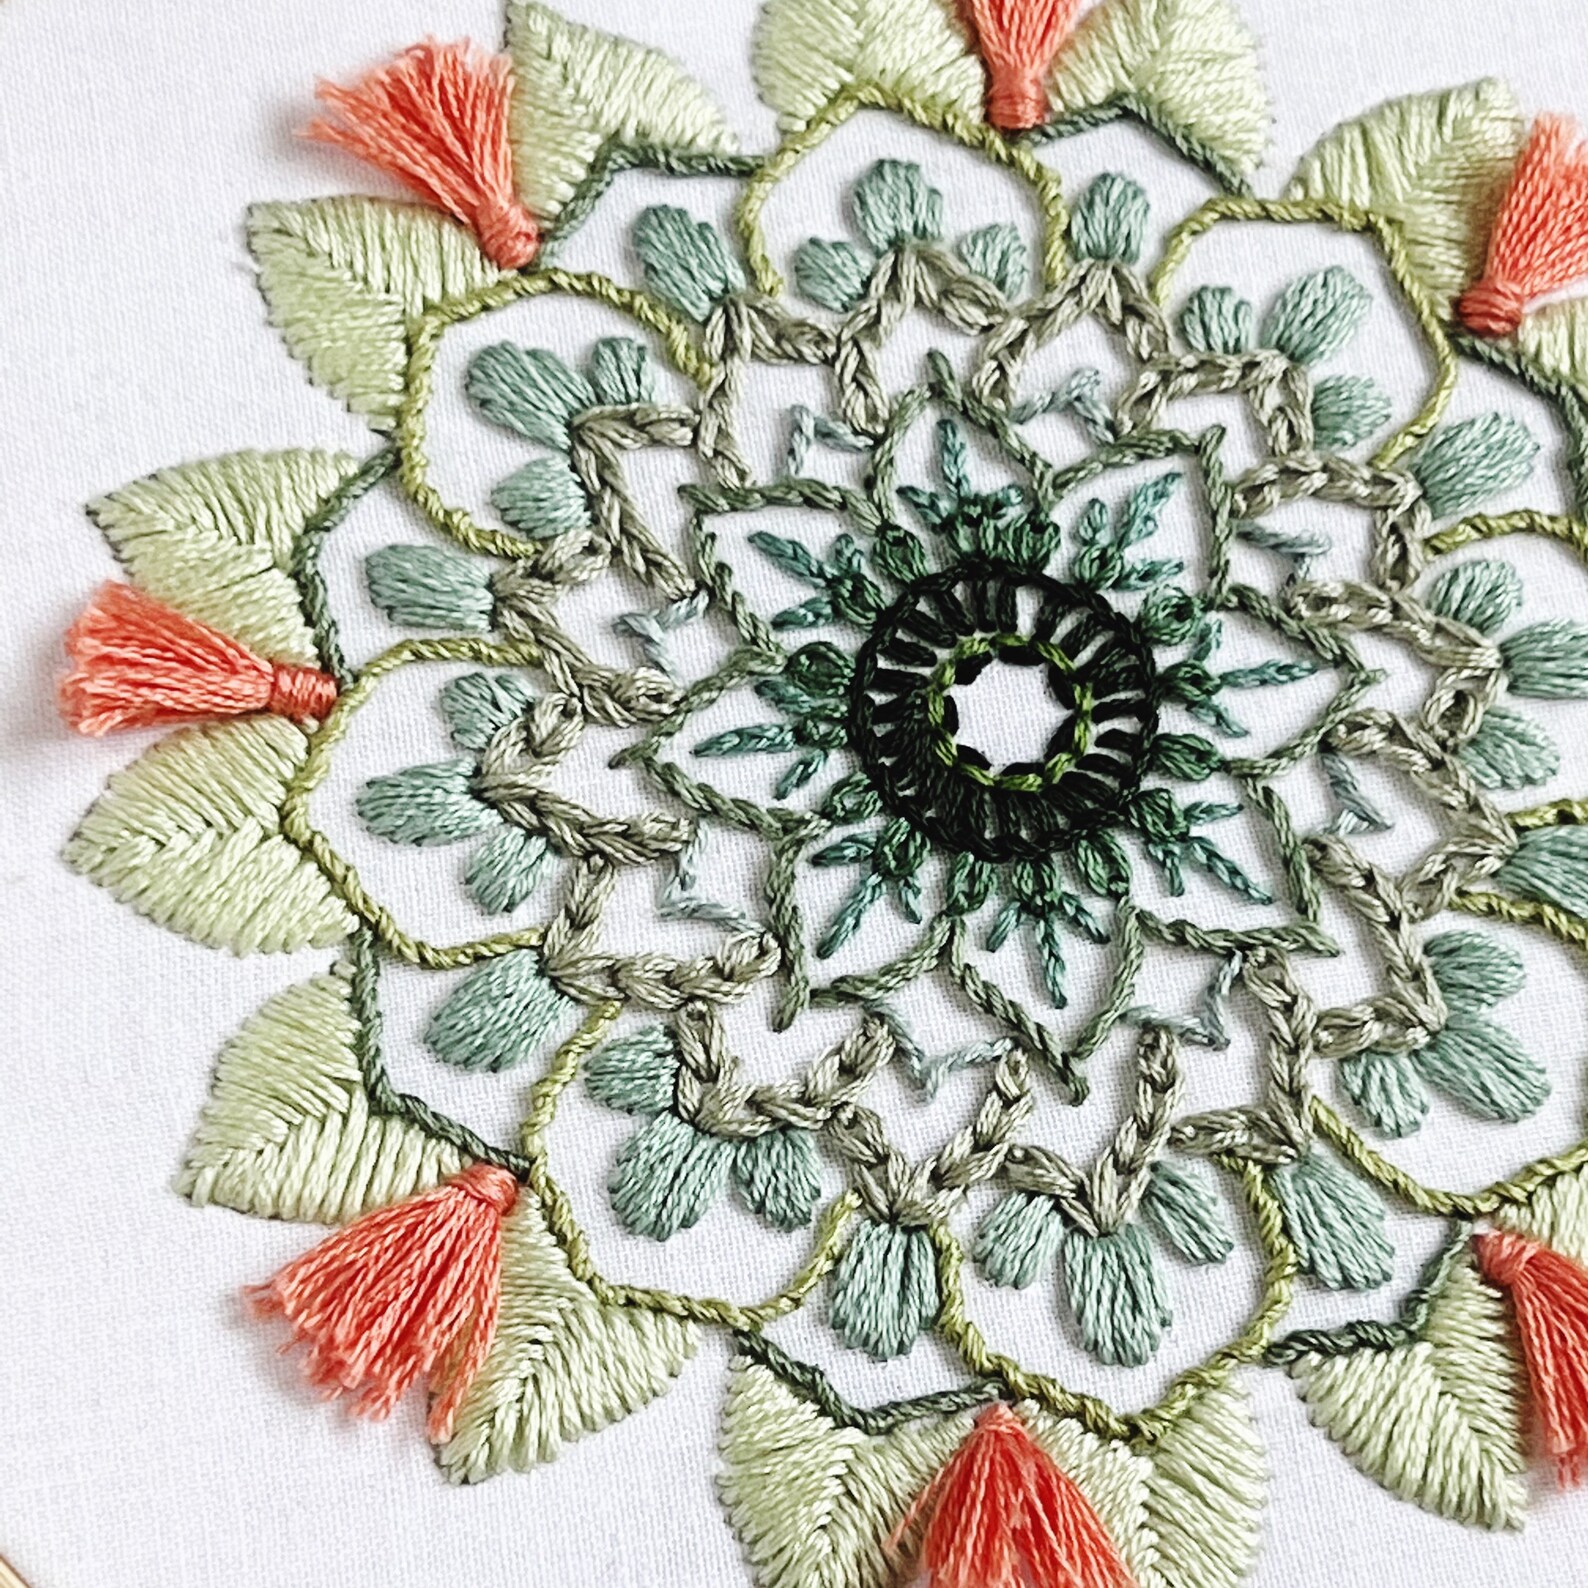 embroidered mandalas